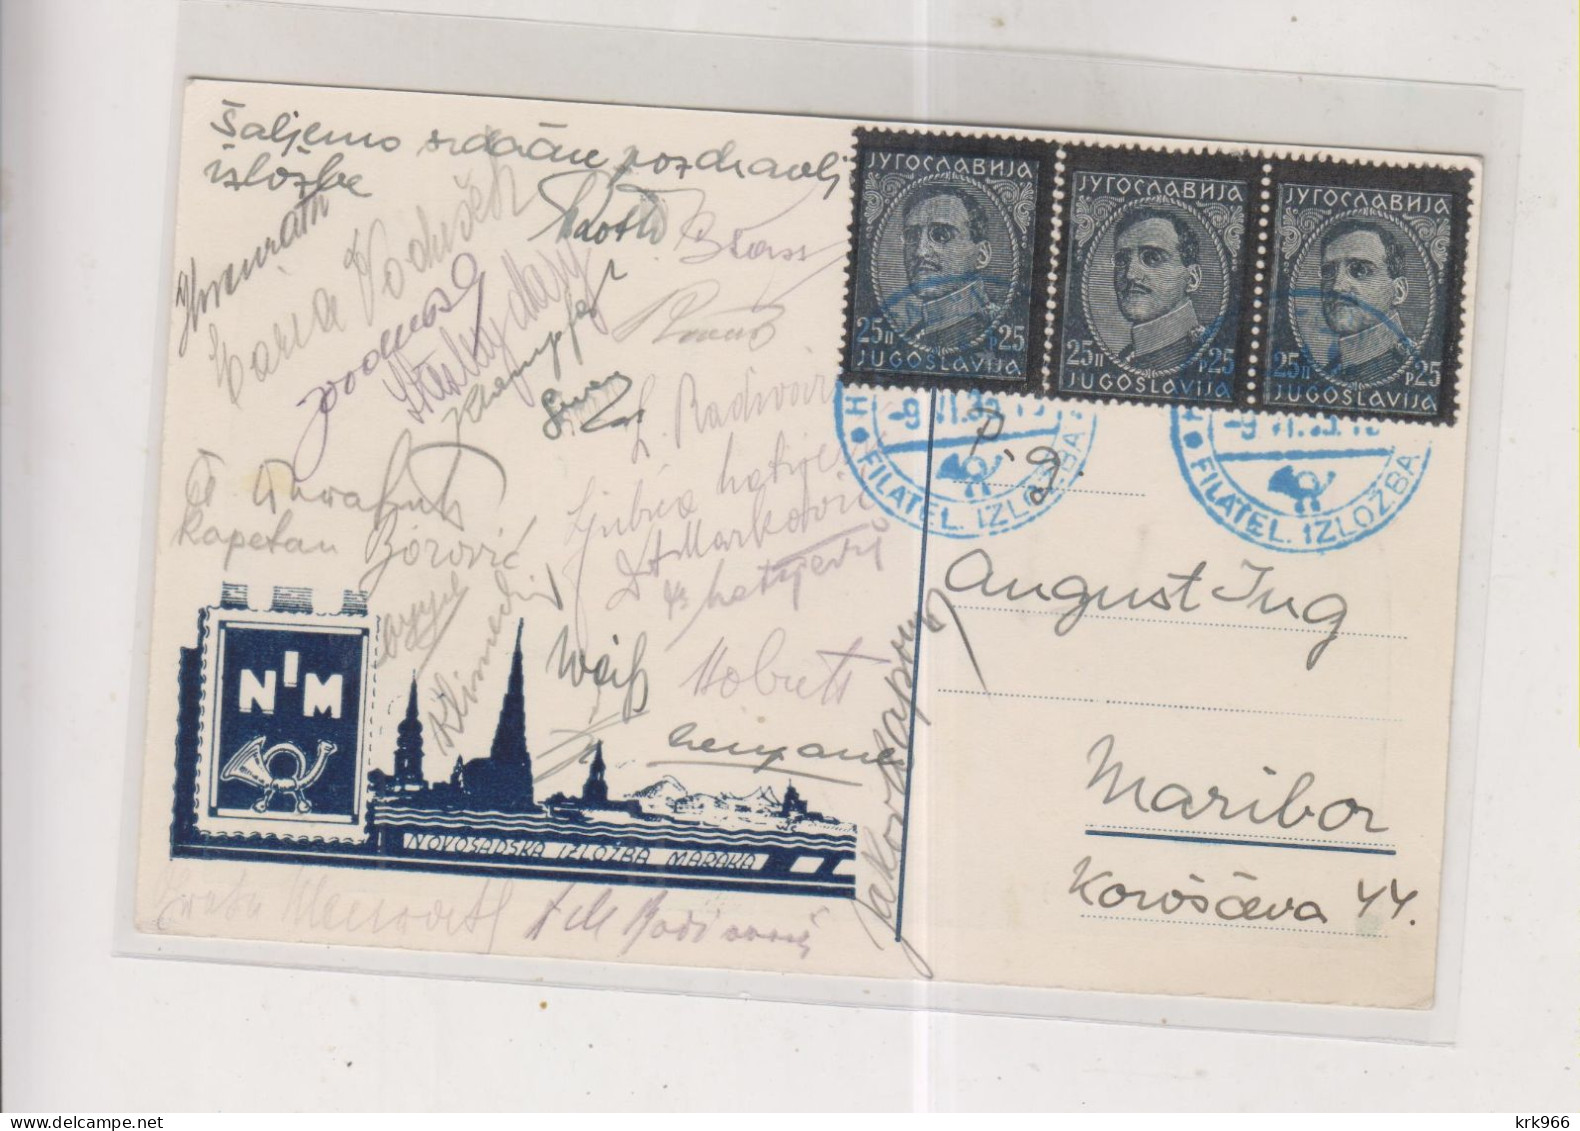 YUGOSLAVIA, NOVI SAD Stamp Expo Postcard With Autographs - Covers & Documents